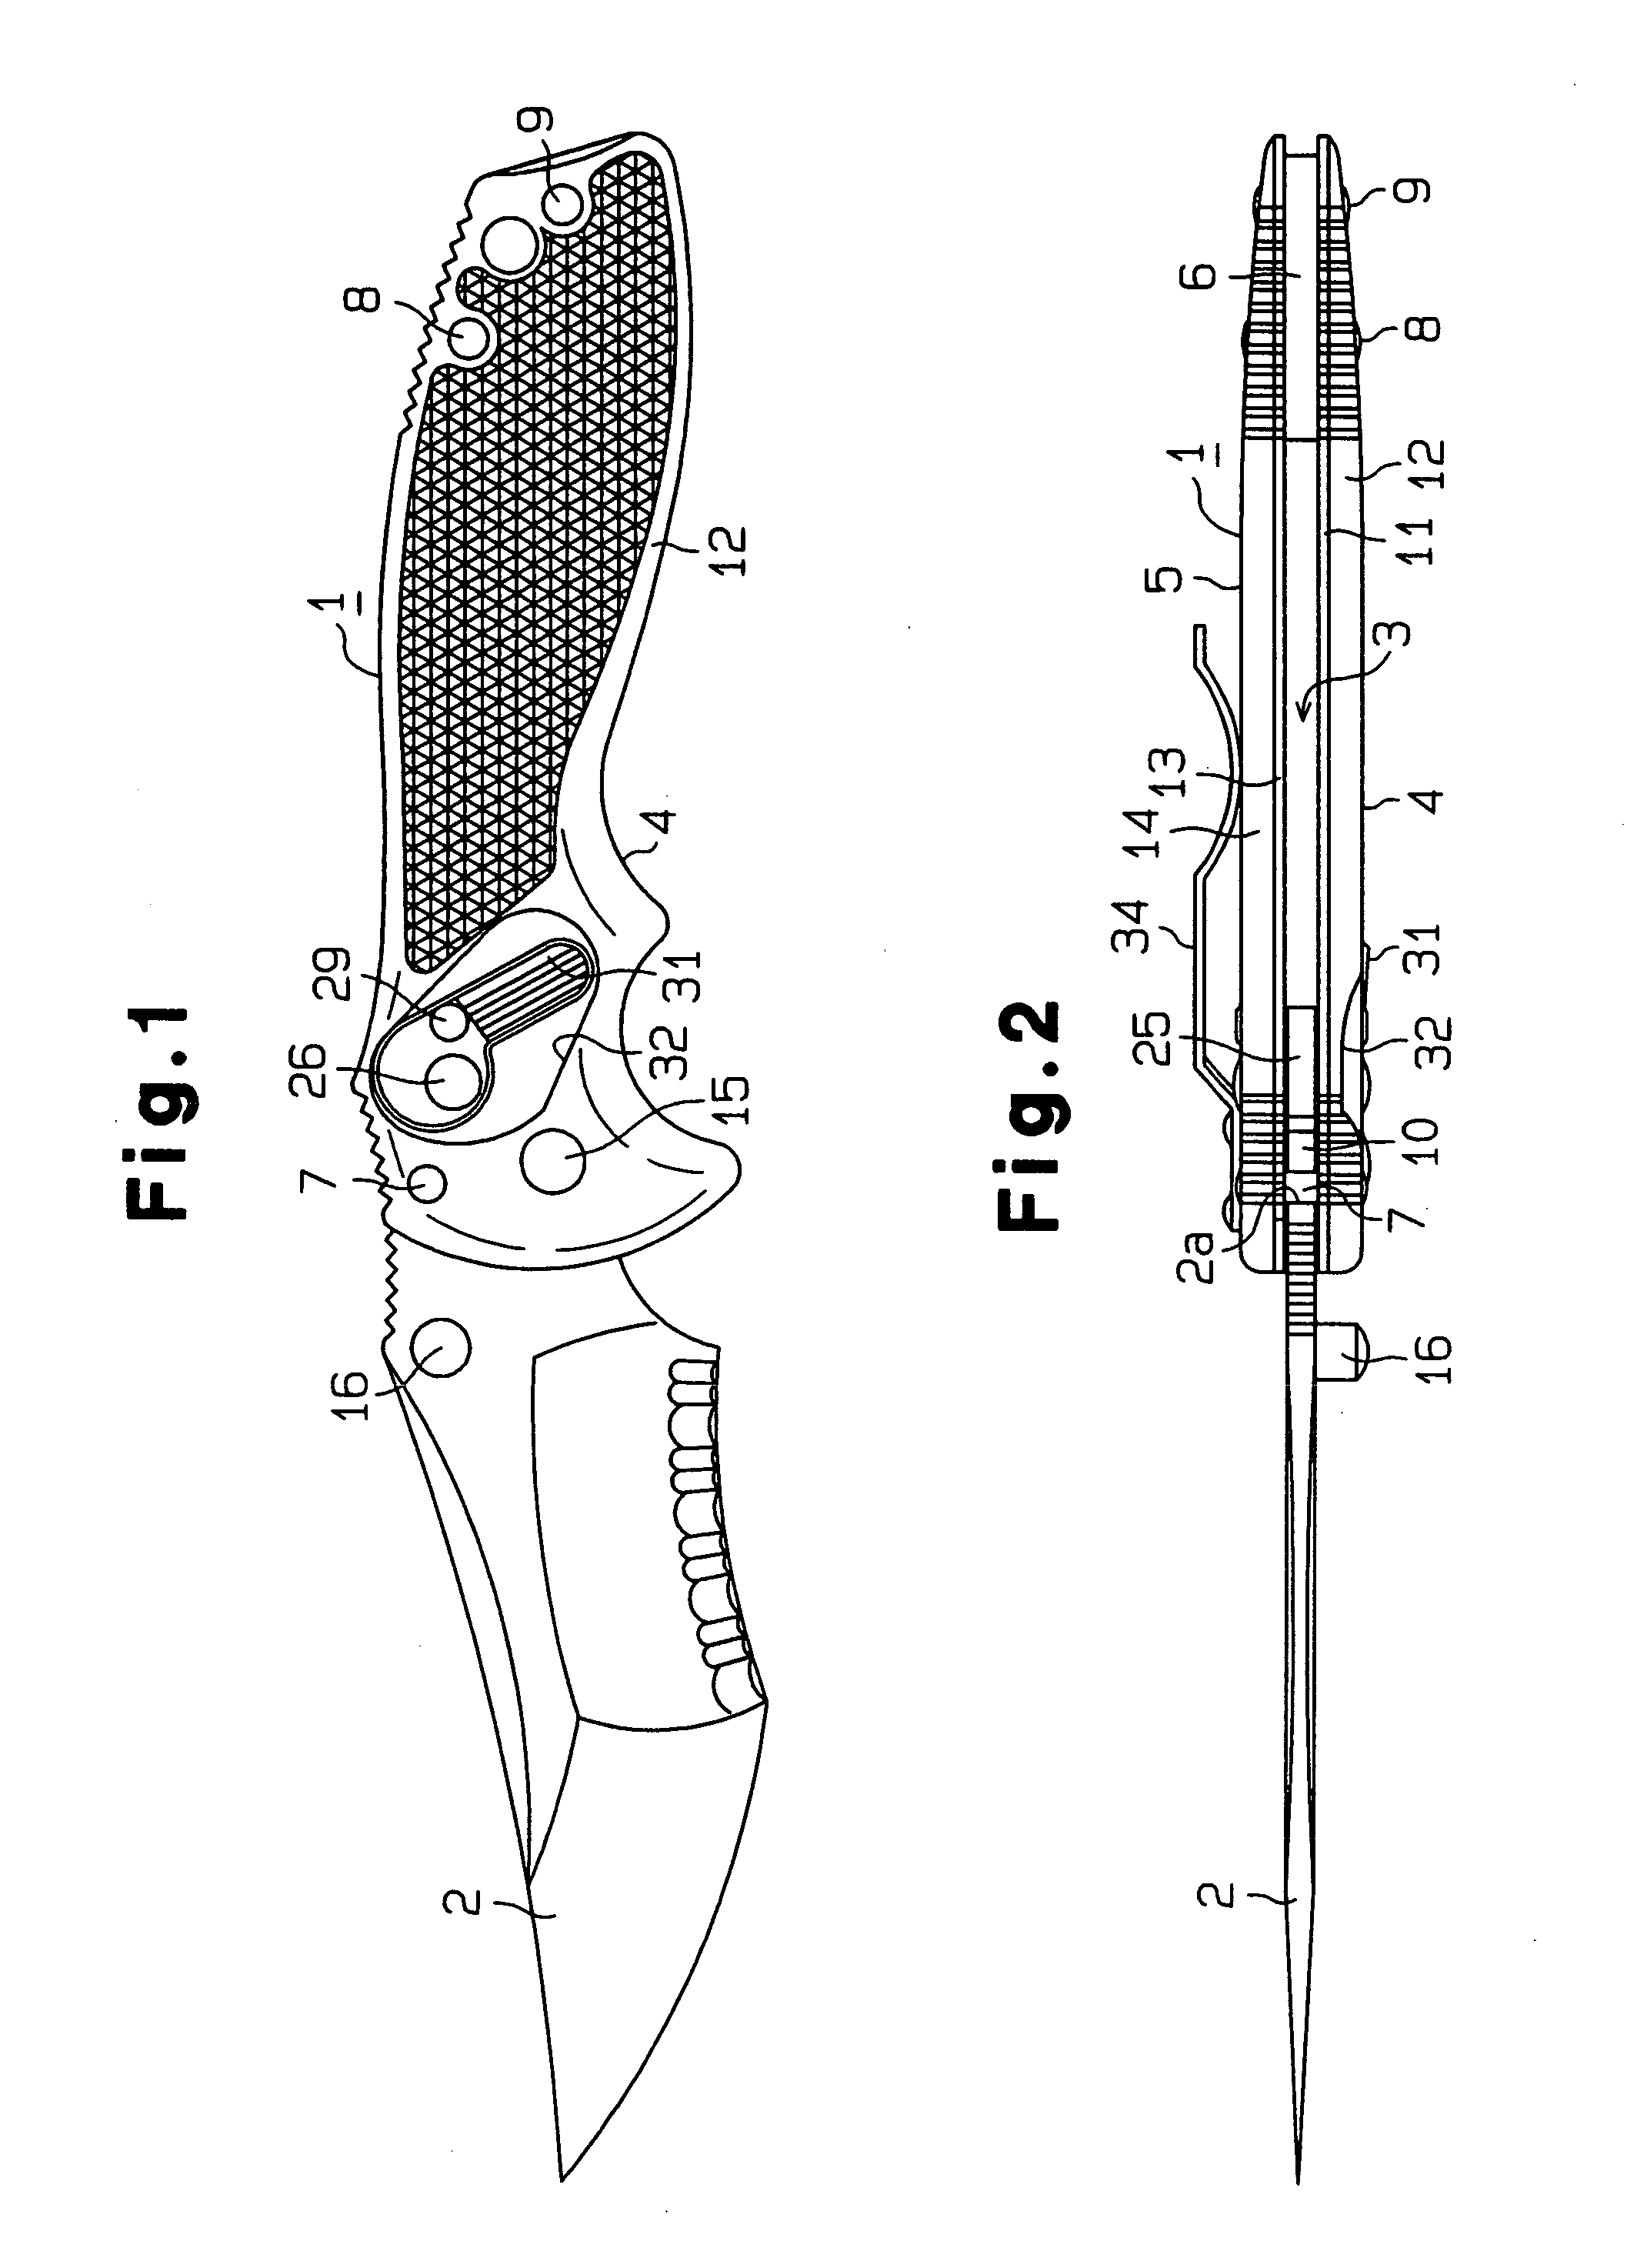 Folding knife with lock mechanism